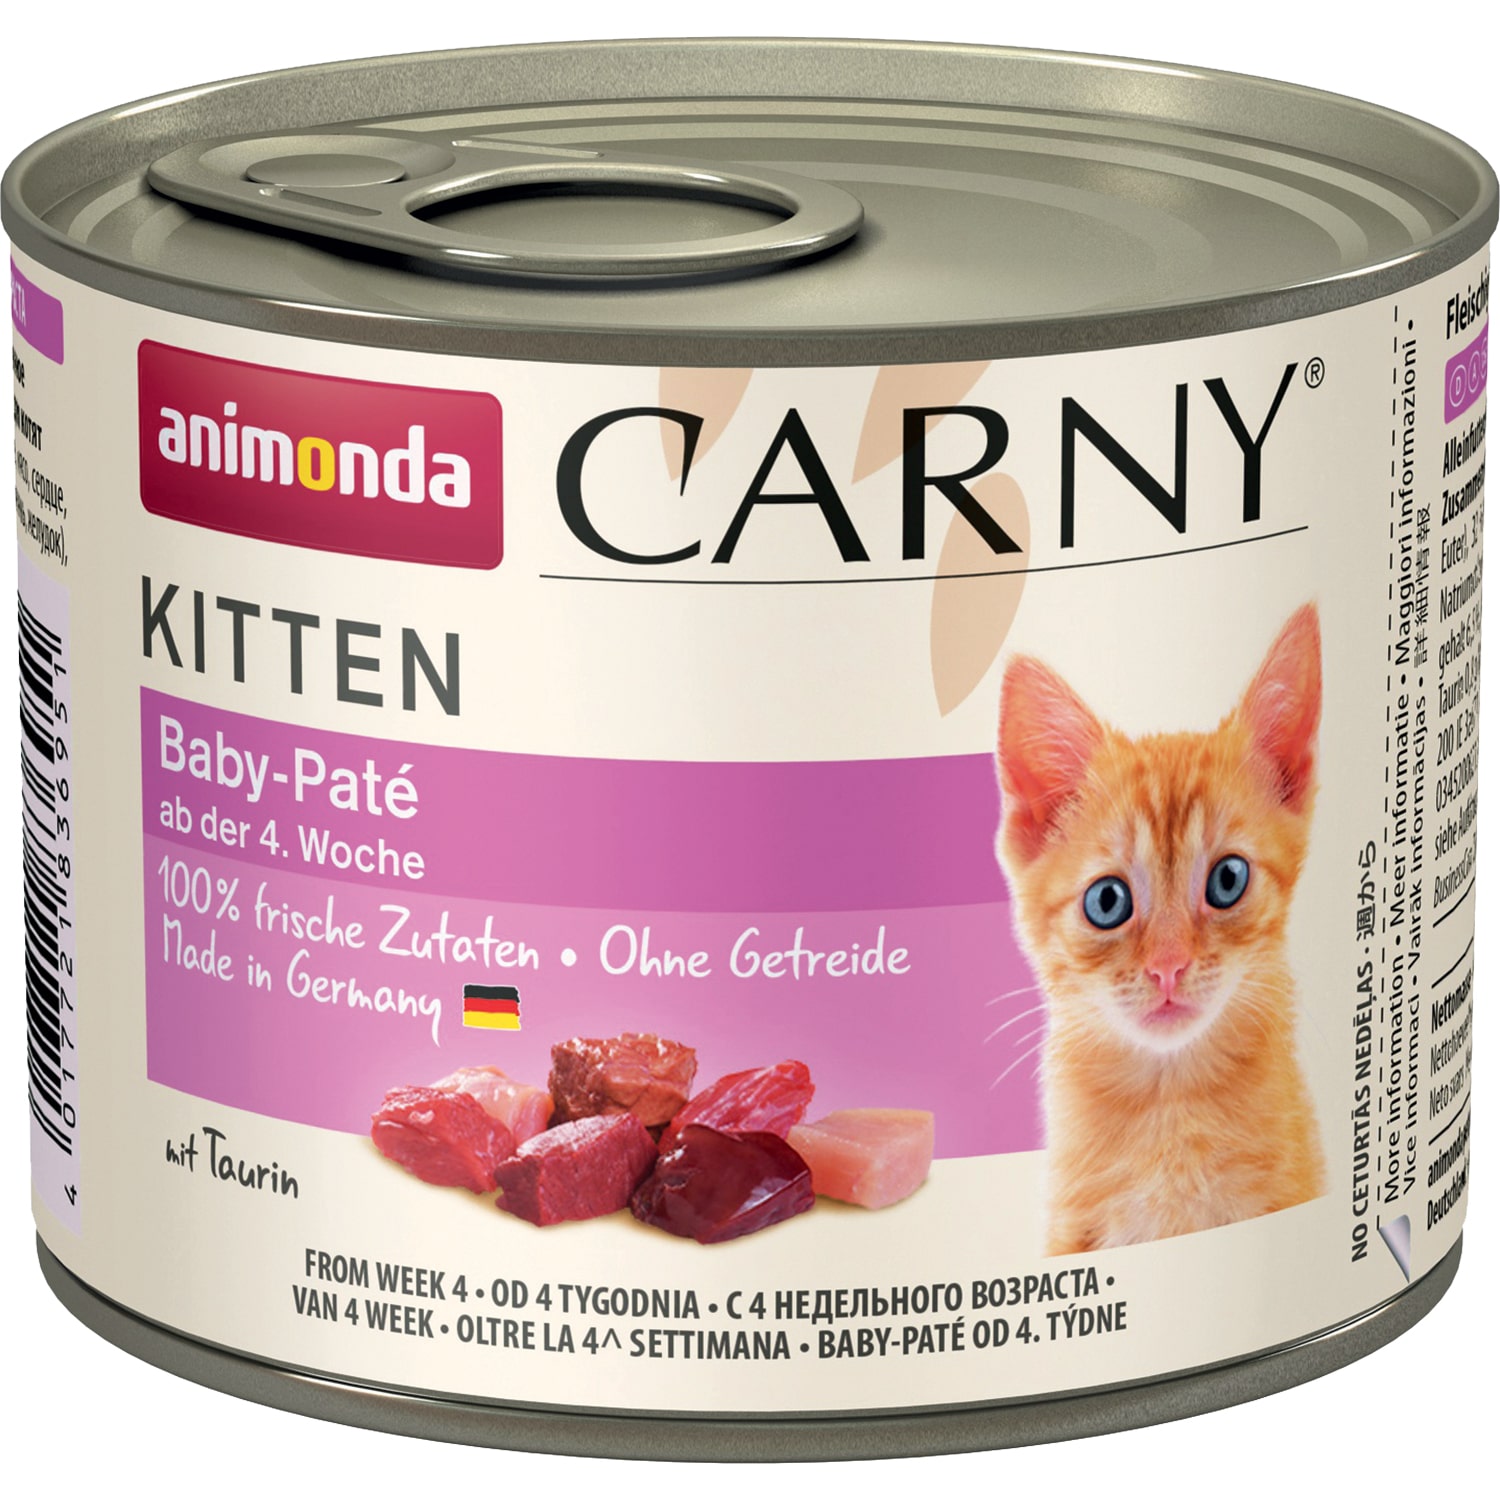 Carny Kitten Baby-Pate корм для котят старше 1 месяца, Animonda